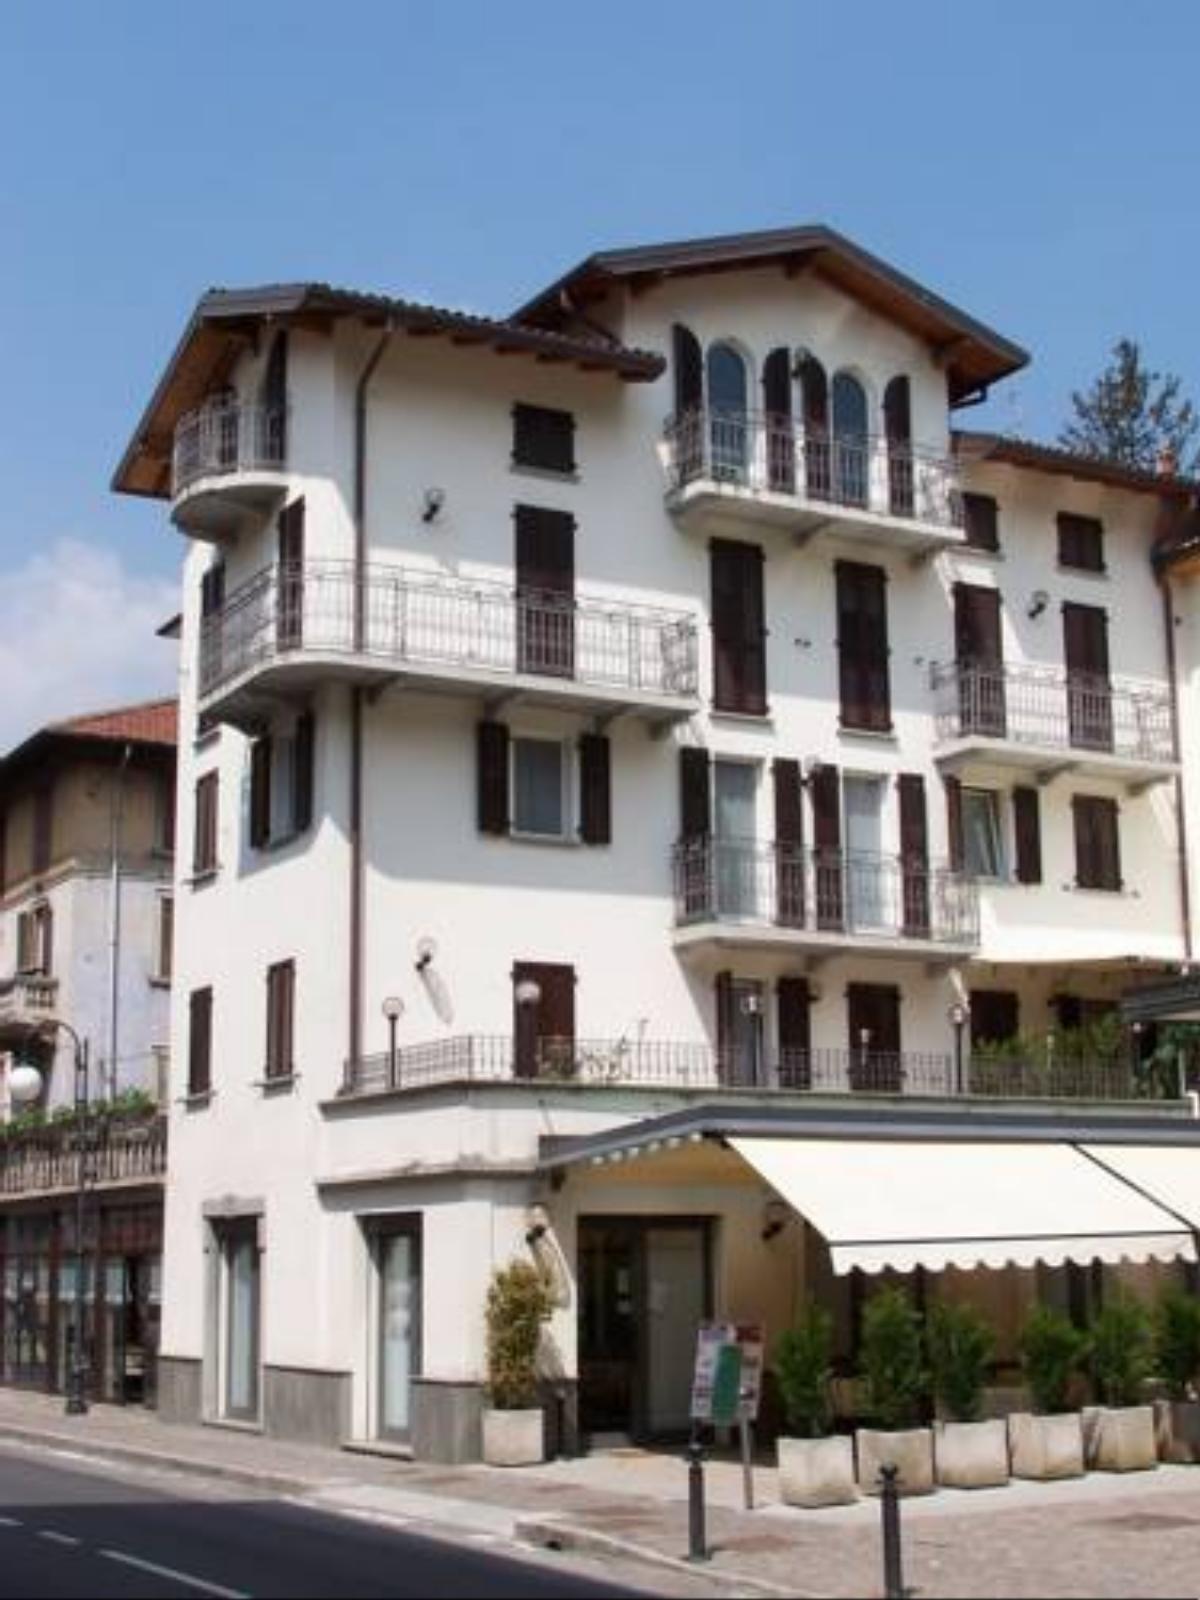 Hotel Avogadro Hotel San Pellegrino Terme Italy